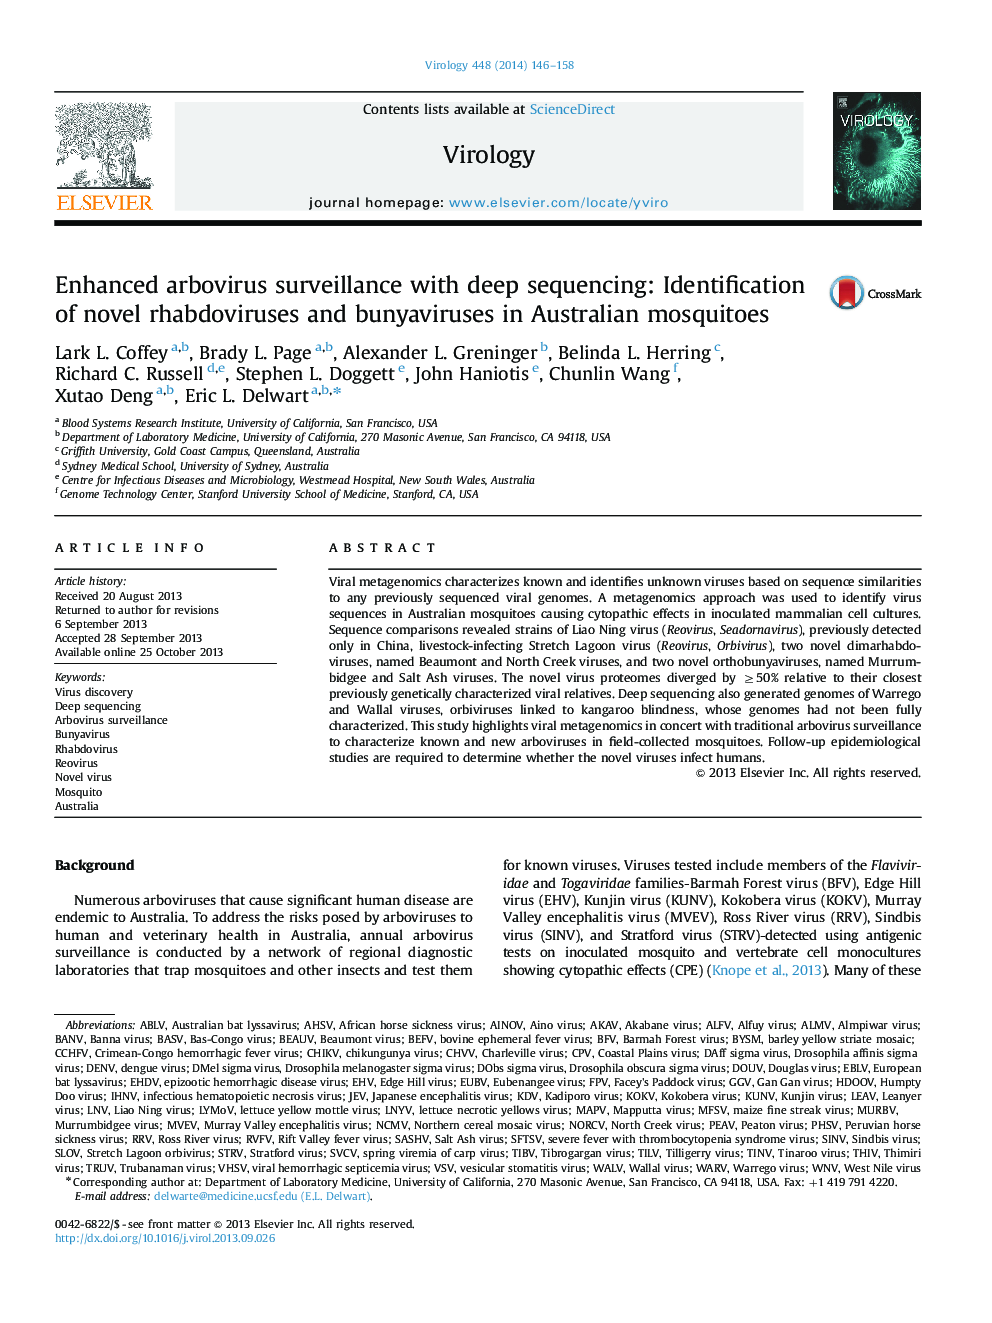 Enhanced arbovirus surveillance with deep sequencing: Identification of novel rhabdoviruses and bunyaviruses in Australian mosquitoes